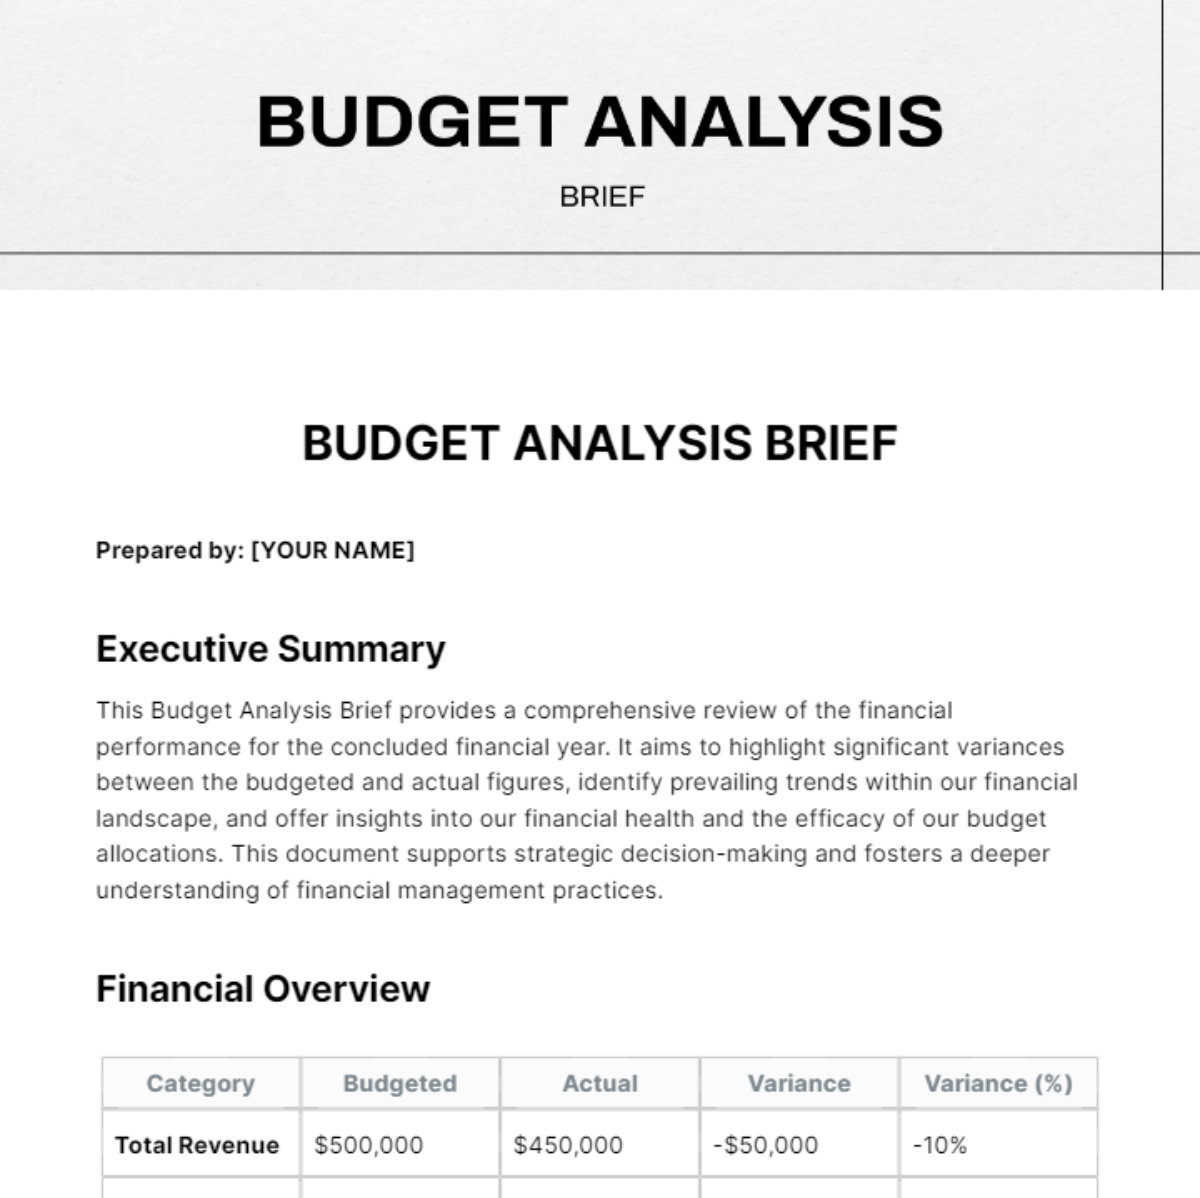 Budget Analysis Brief Template